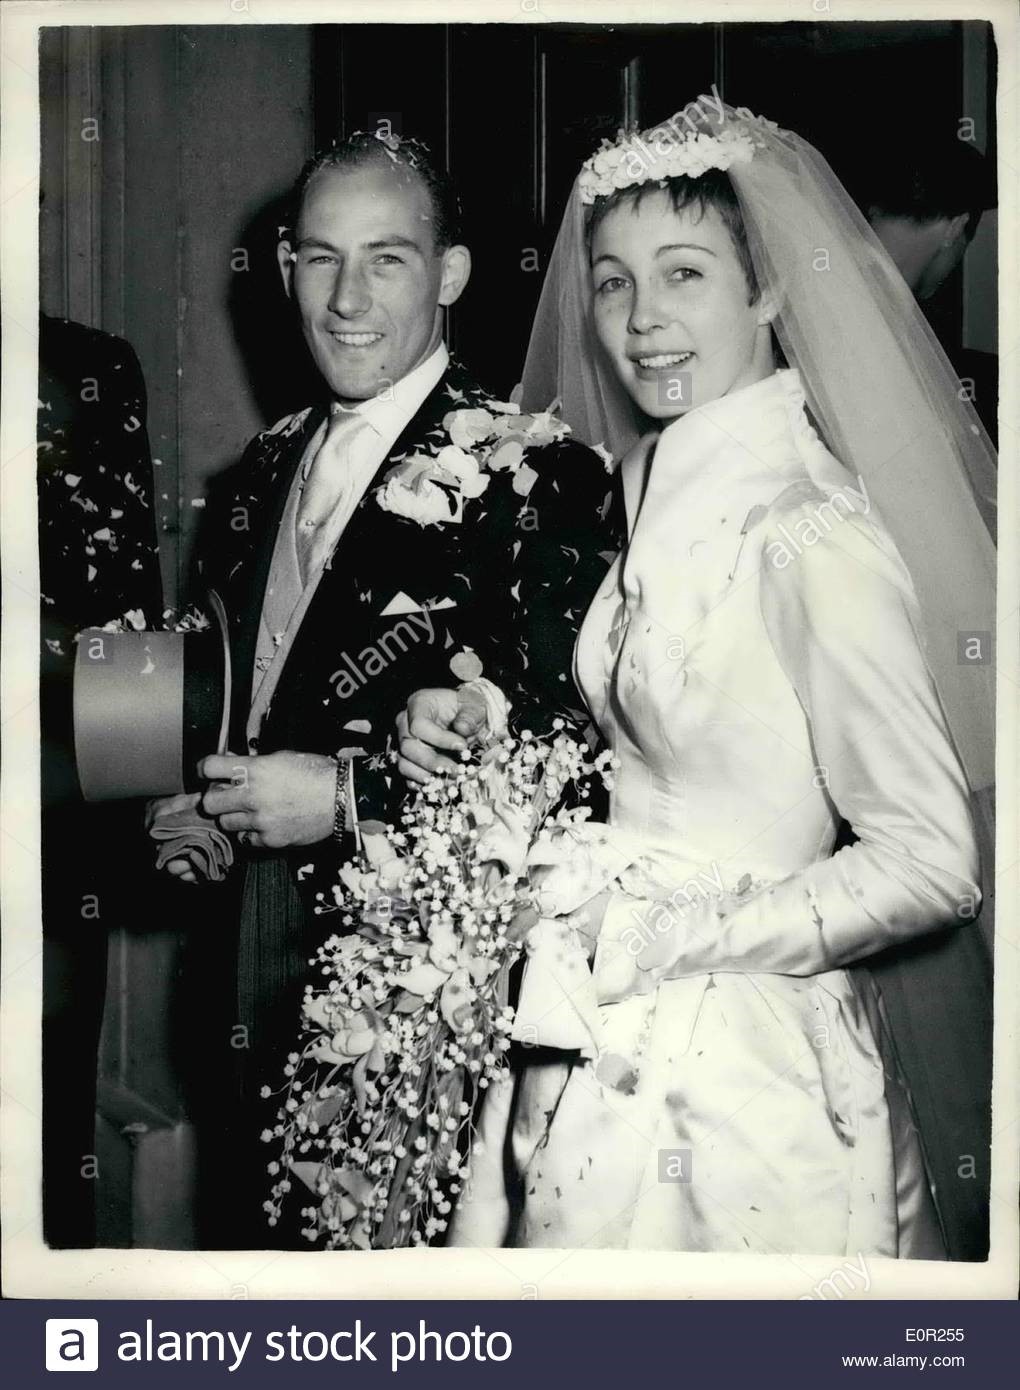 October 10, 1957. Stirling Moss weds Katie.